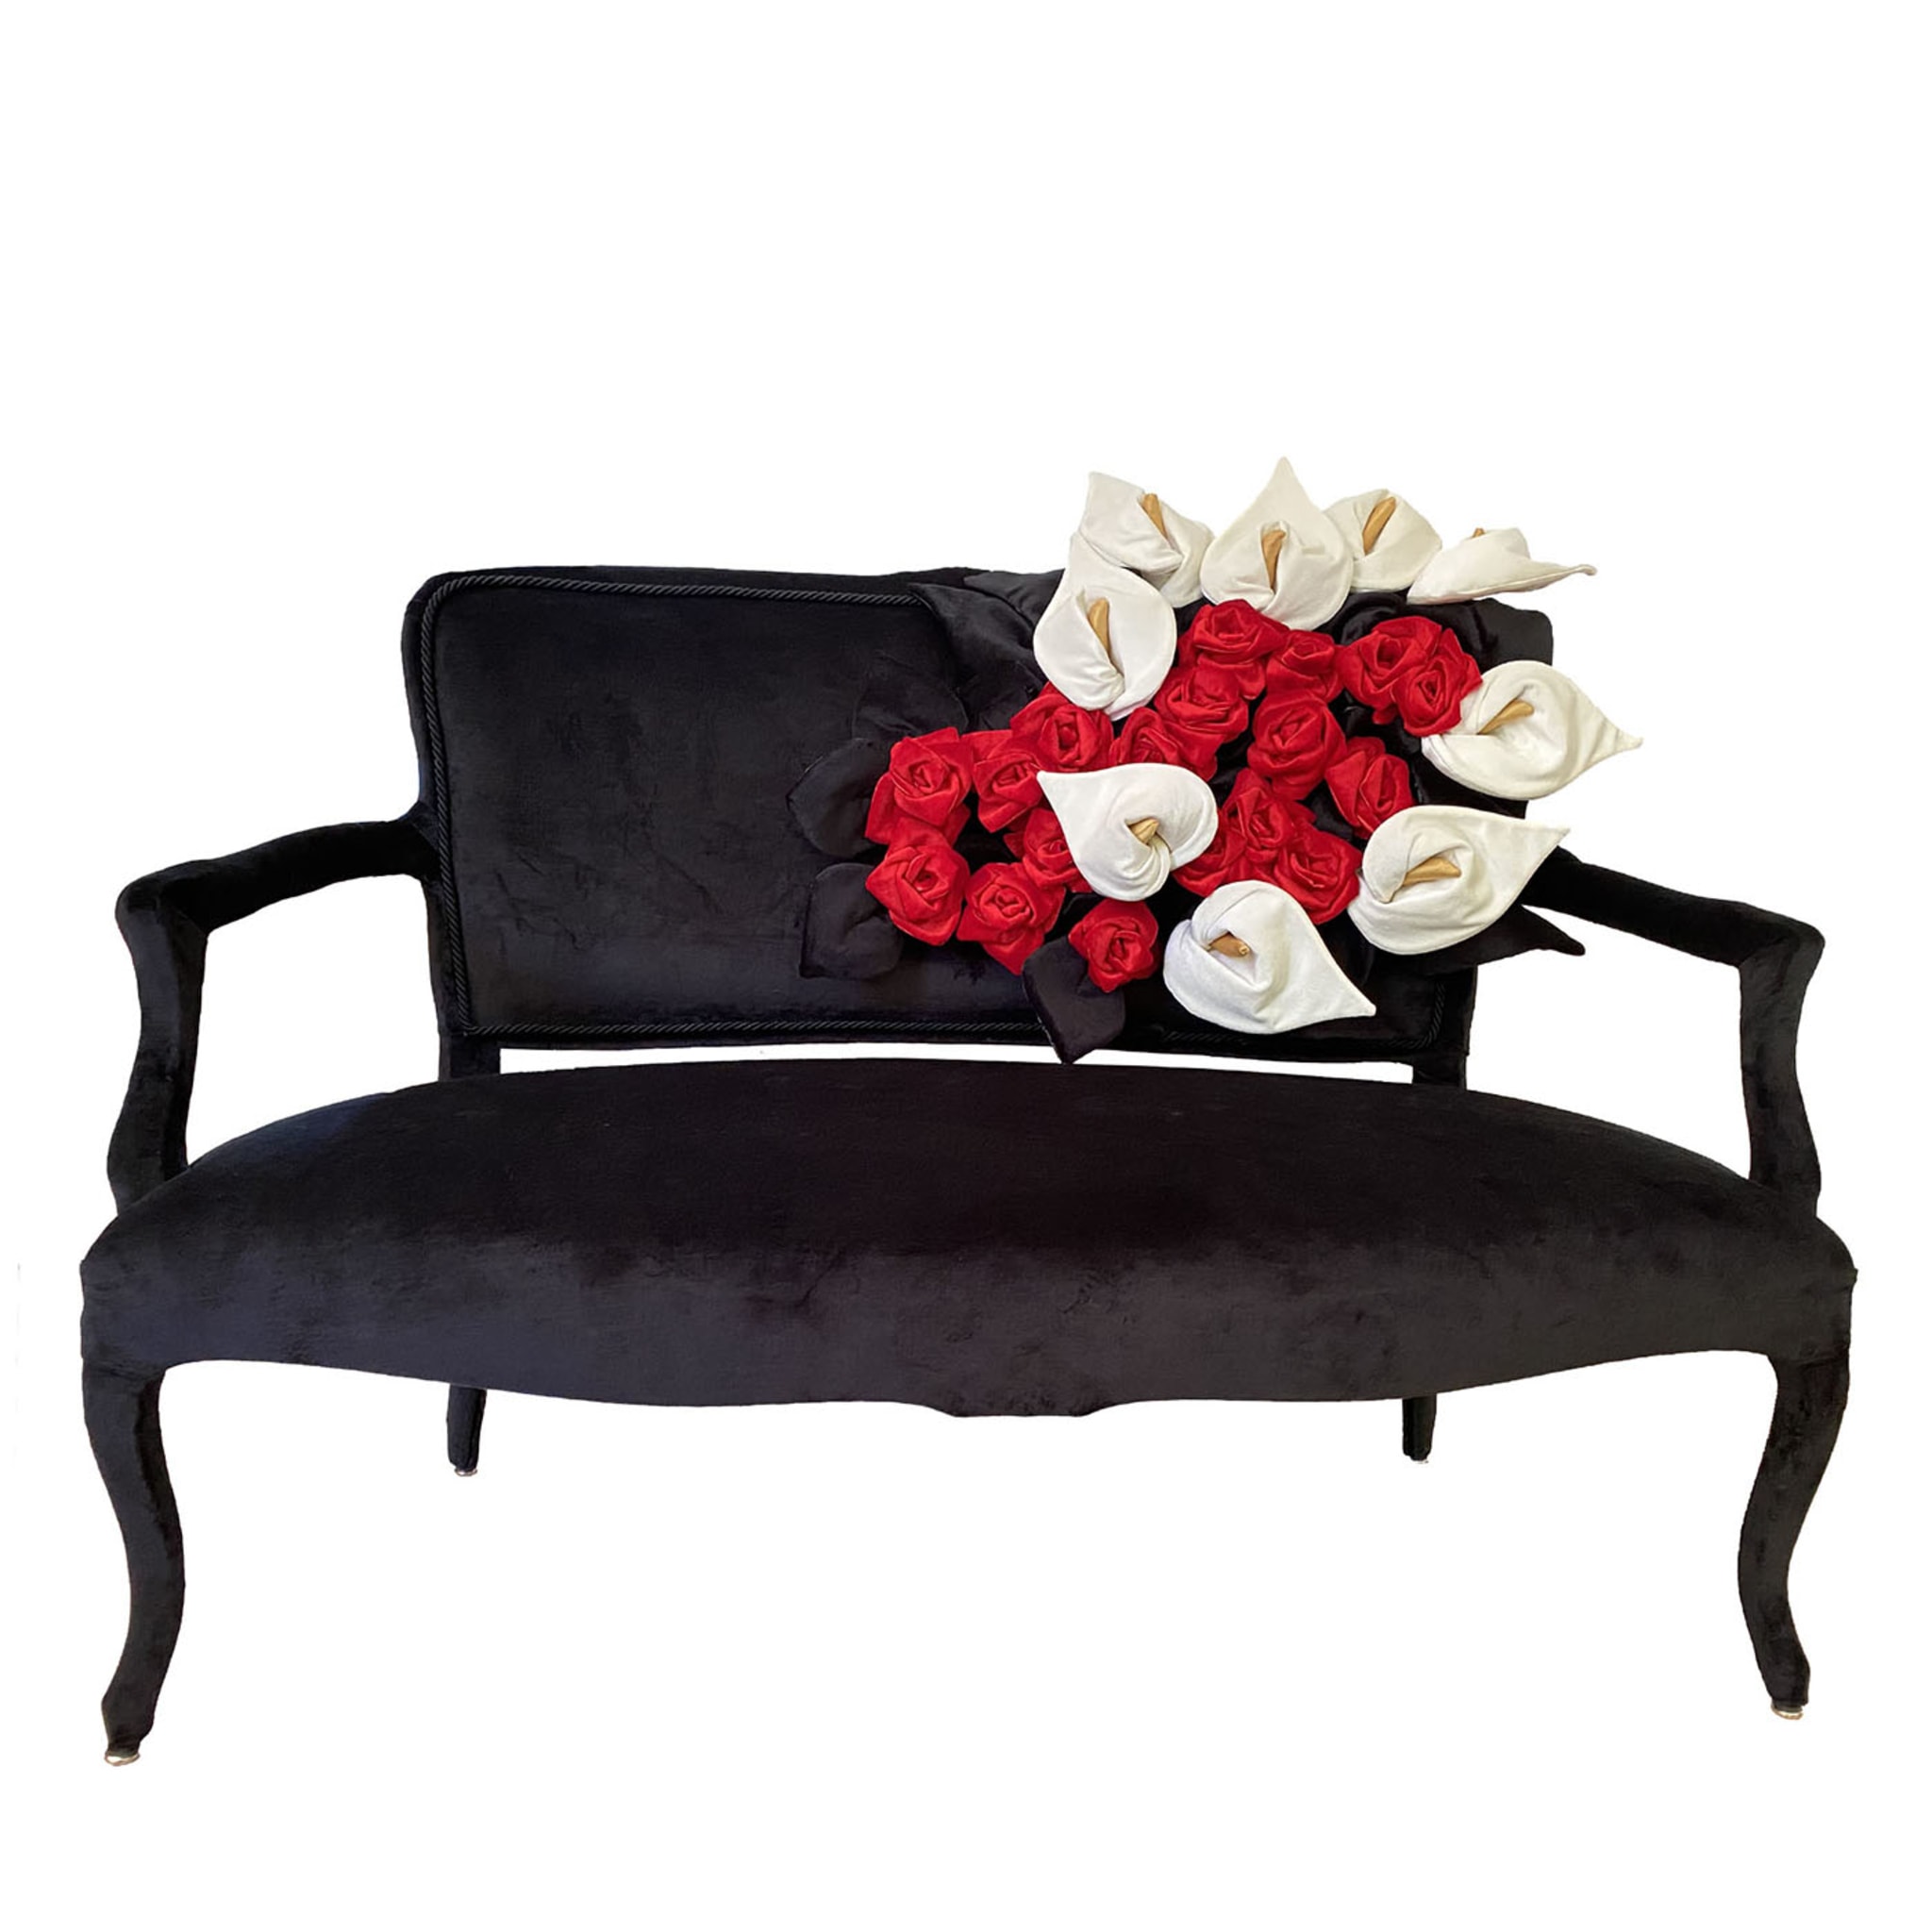 La Rinascita Floral Black Sofa - Main view